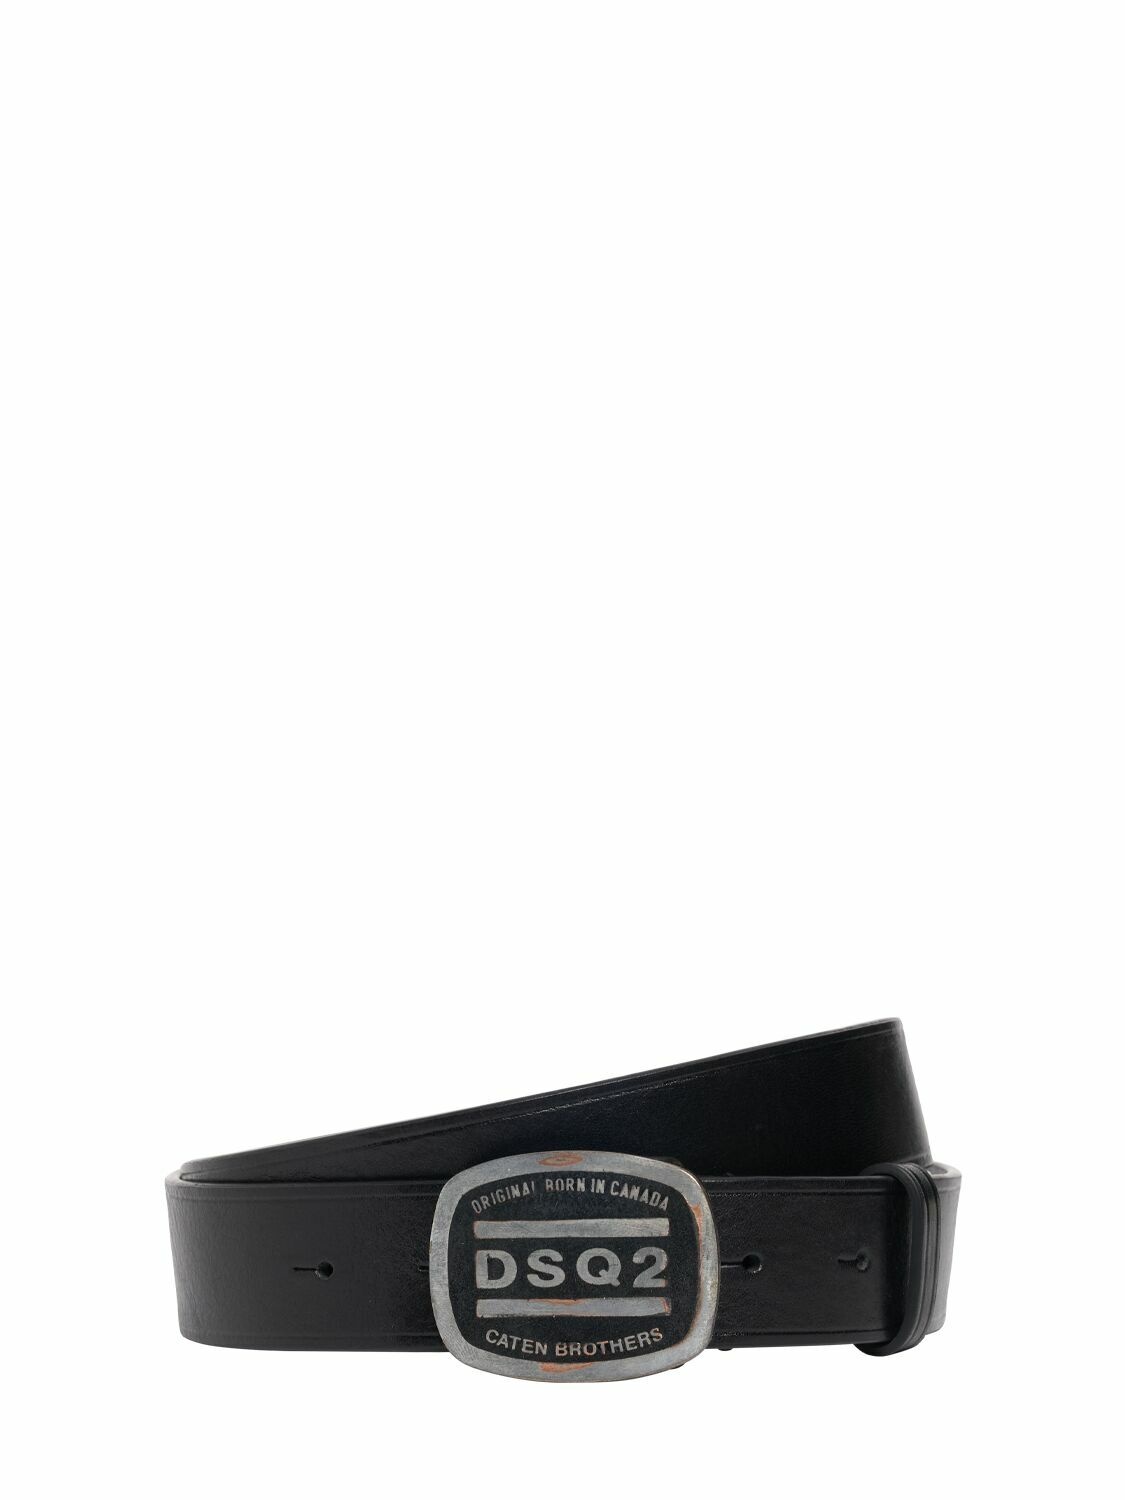 Photo: DSQUARED2 - Dsq2 Leather Buckle Belt